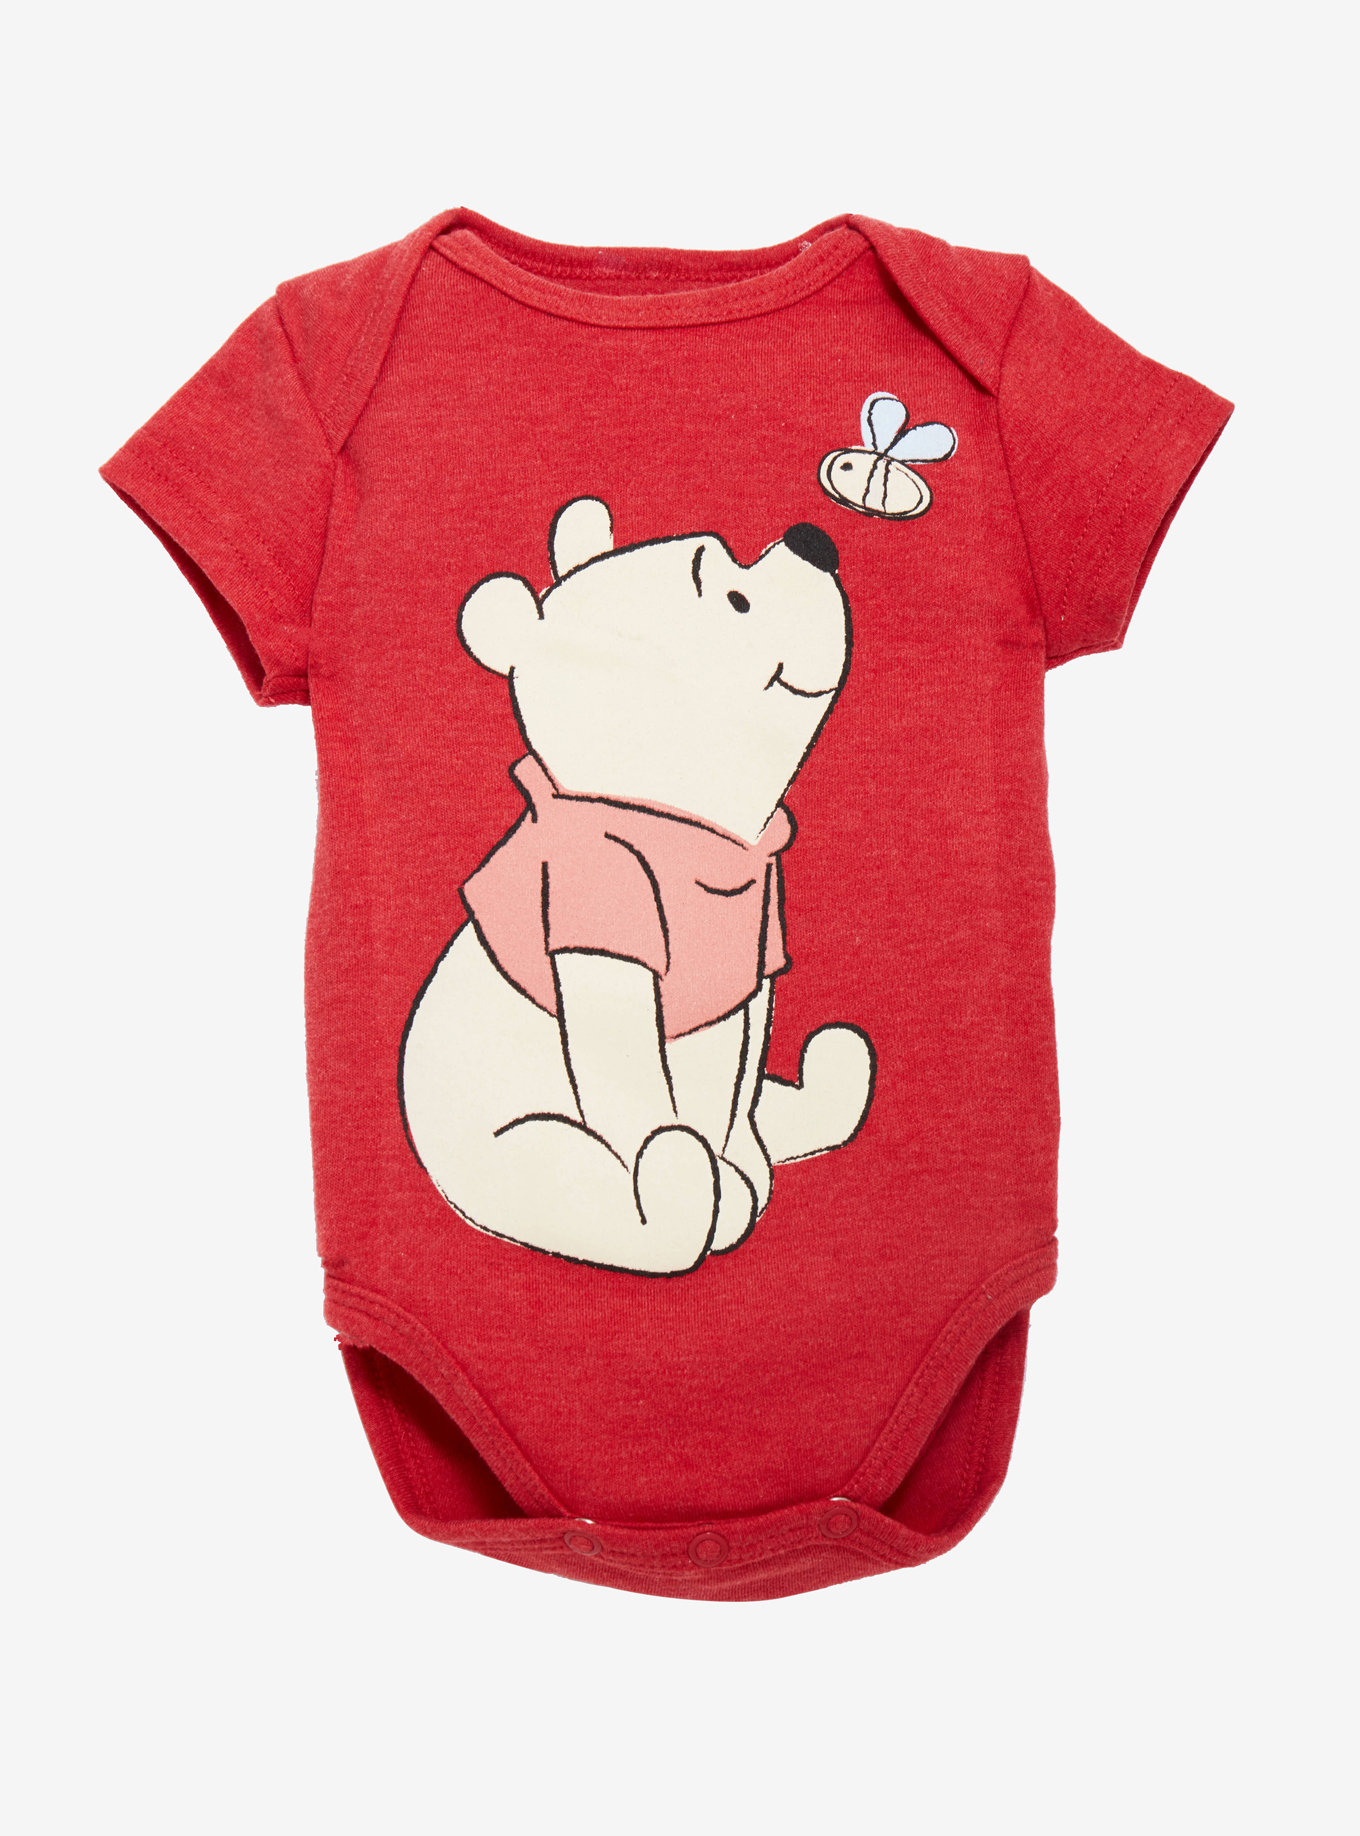 Winnie the Pooh одежда. Disney Baby одежда. Бейби мило одежда. Комбинезон Disney Baby красный. Пятачок одежда